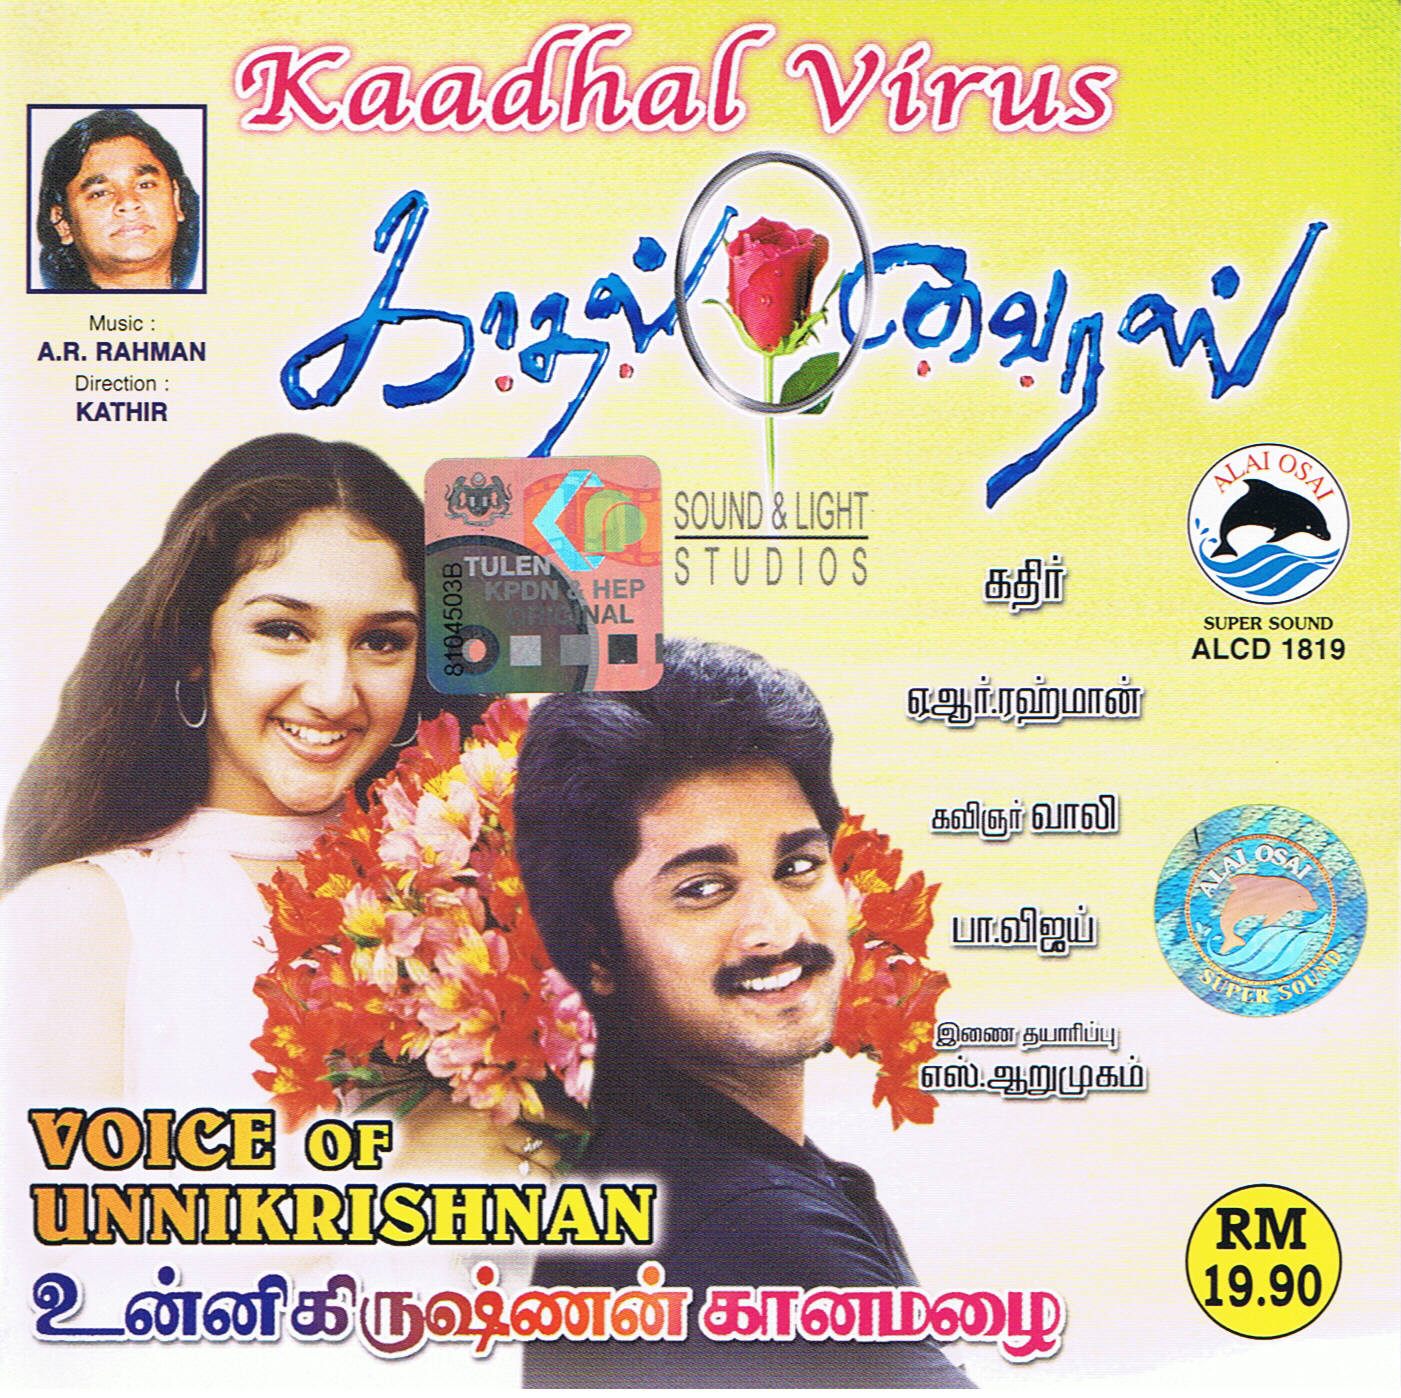 Sallu Ki Shaadi In Tamil Free Download